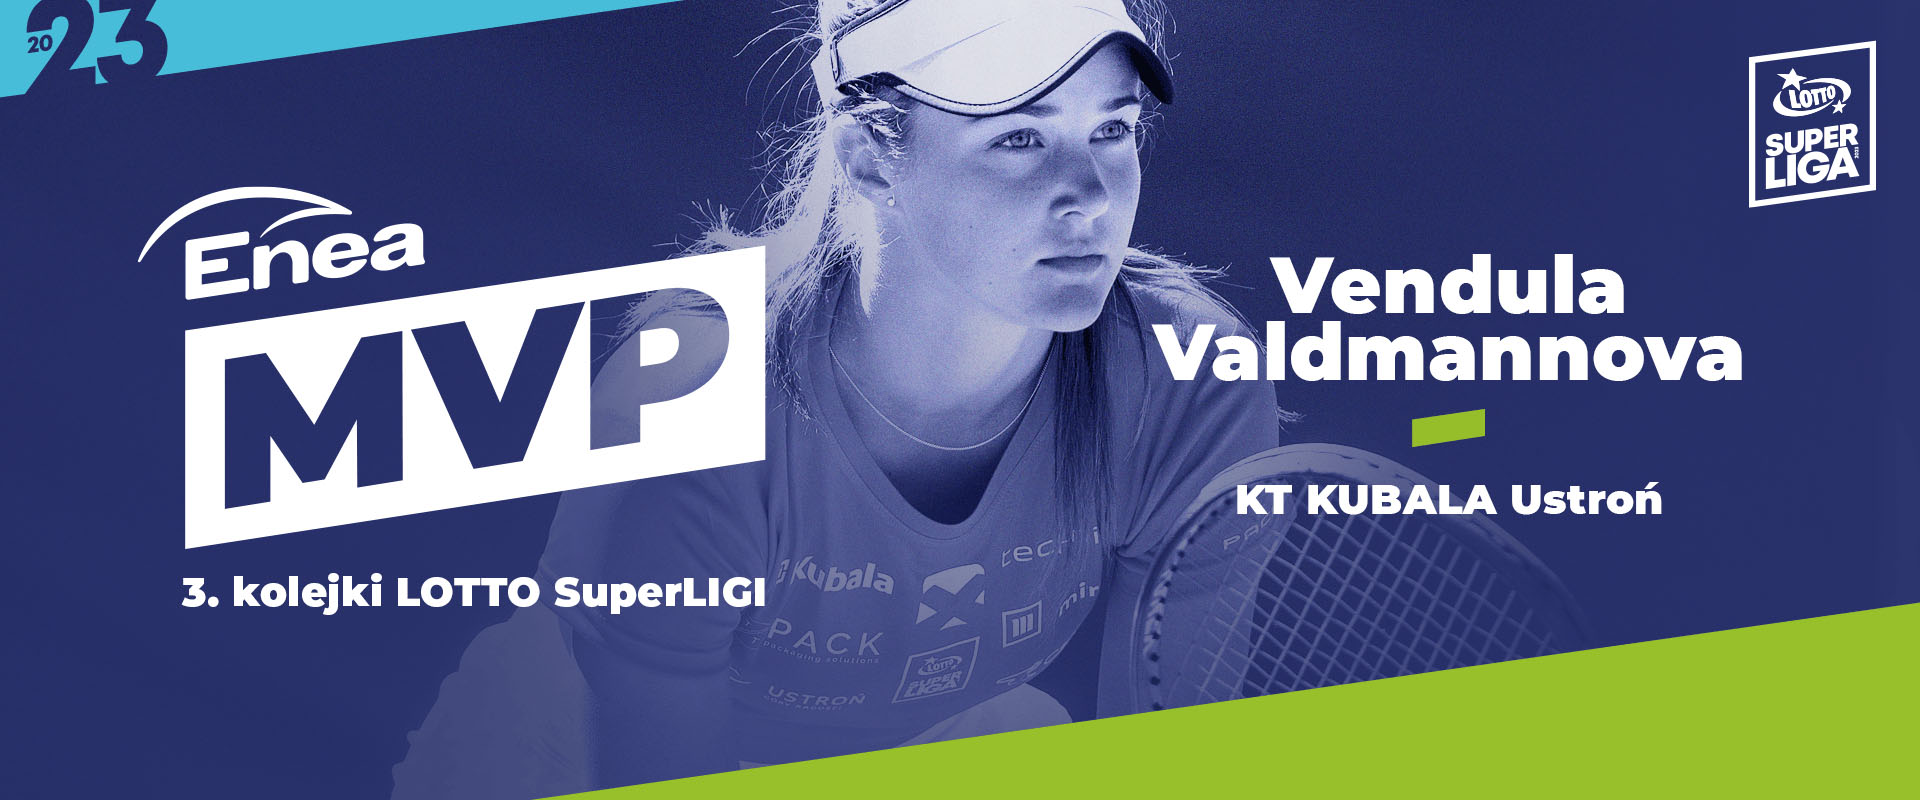 Vendula Valdmannova – Enea MVP der 3. Runde